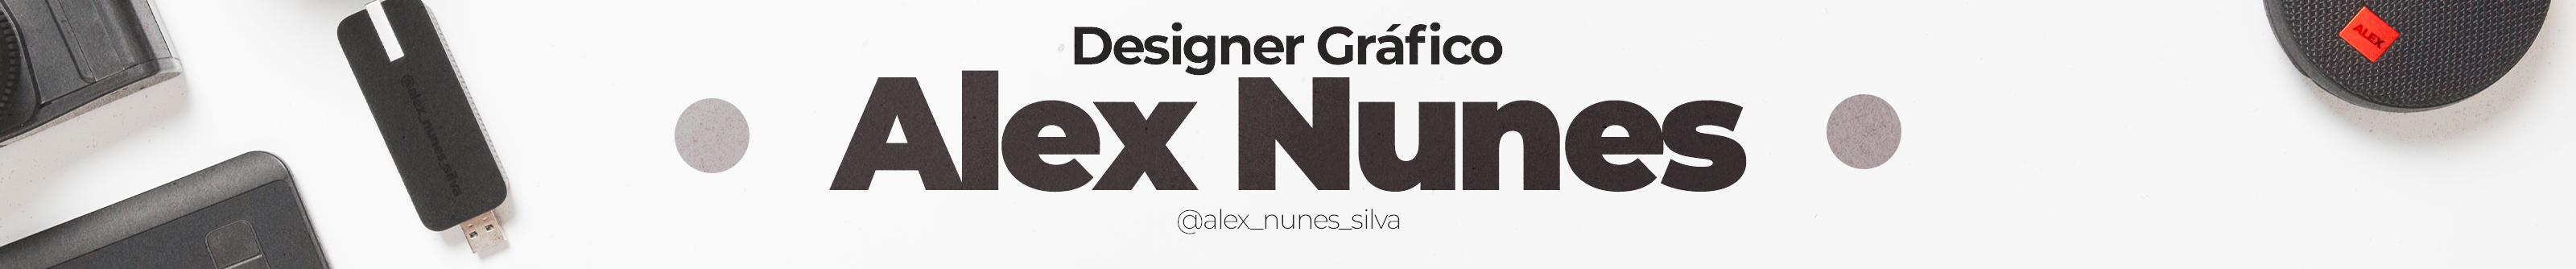 Alex Nunes's profile banner